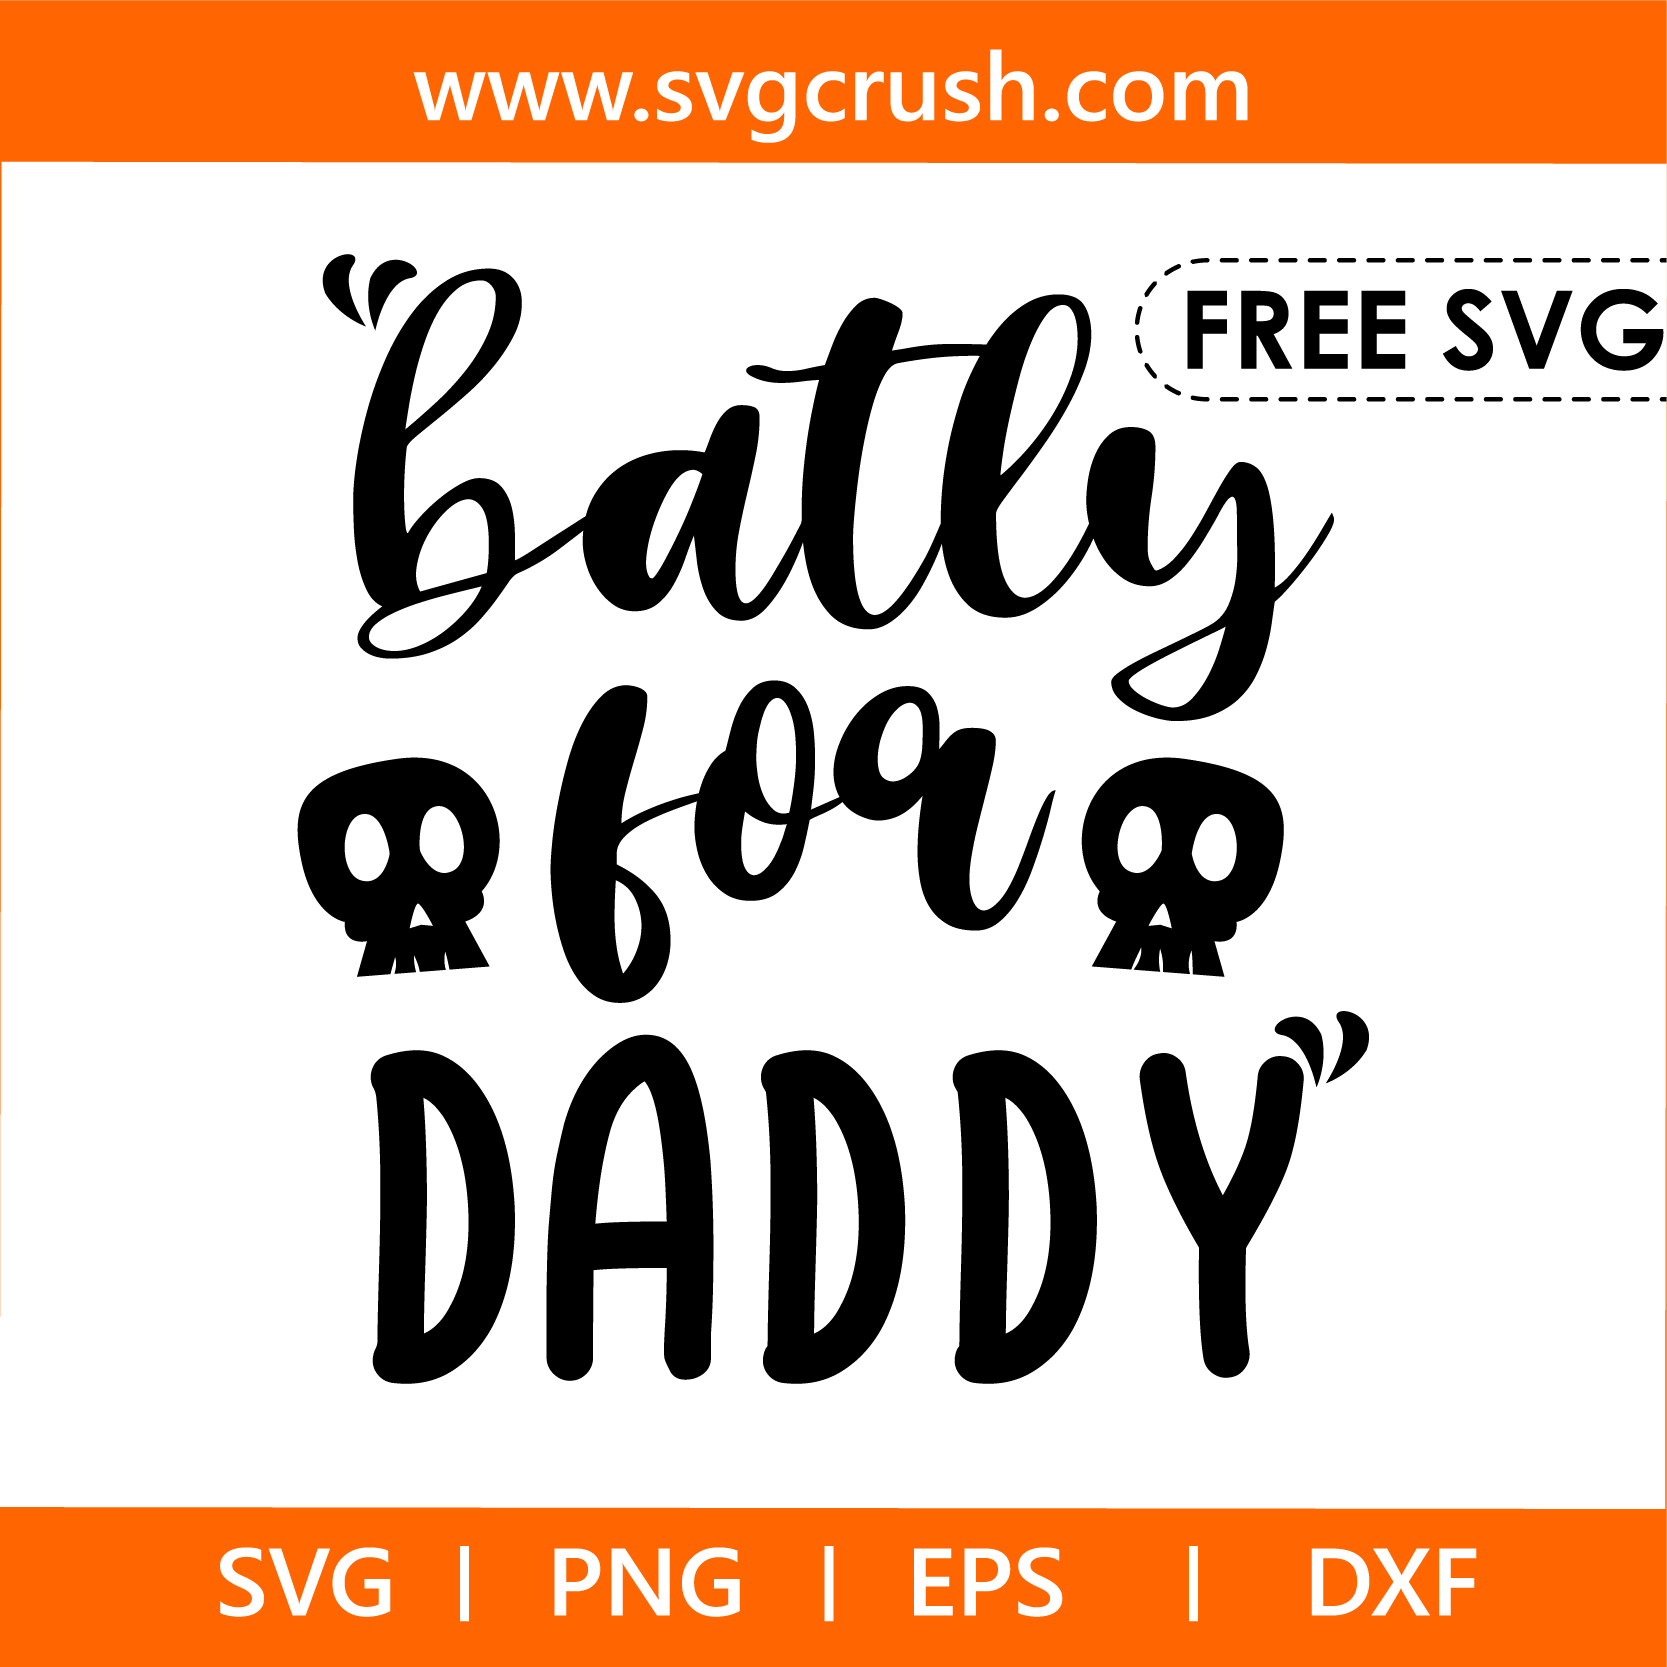 free batly-for-daddy-002 svg